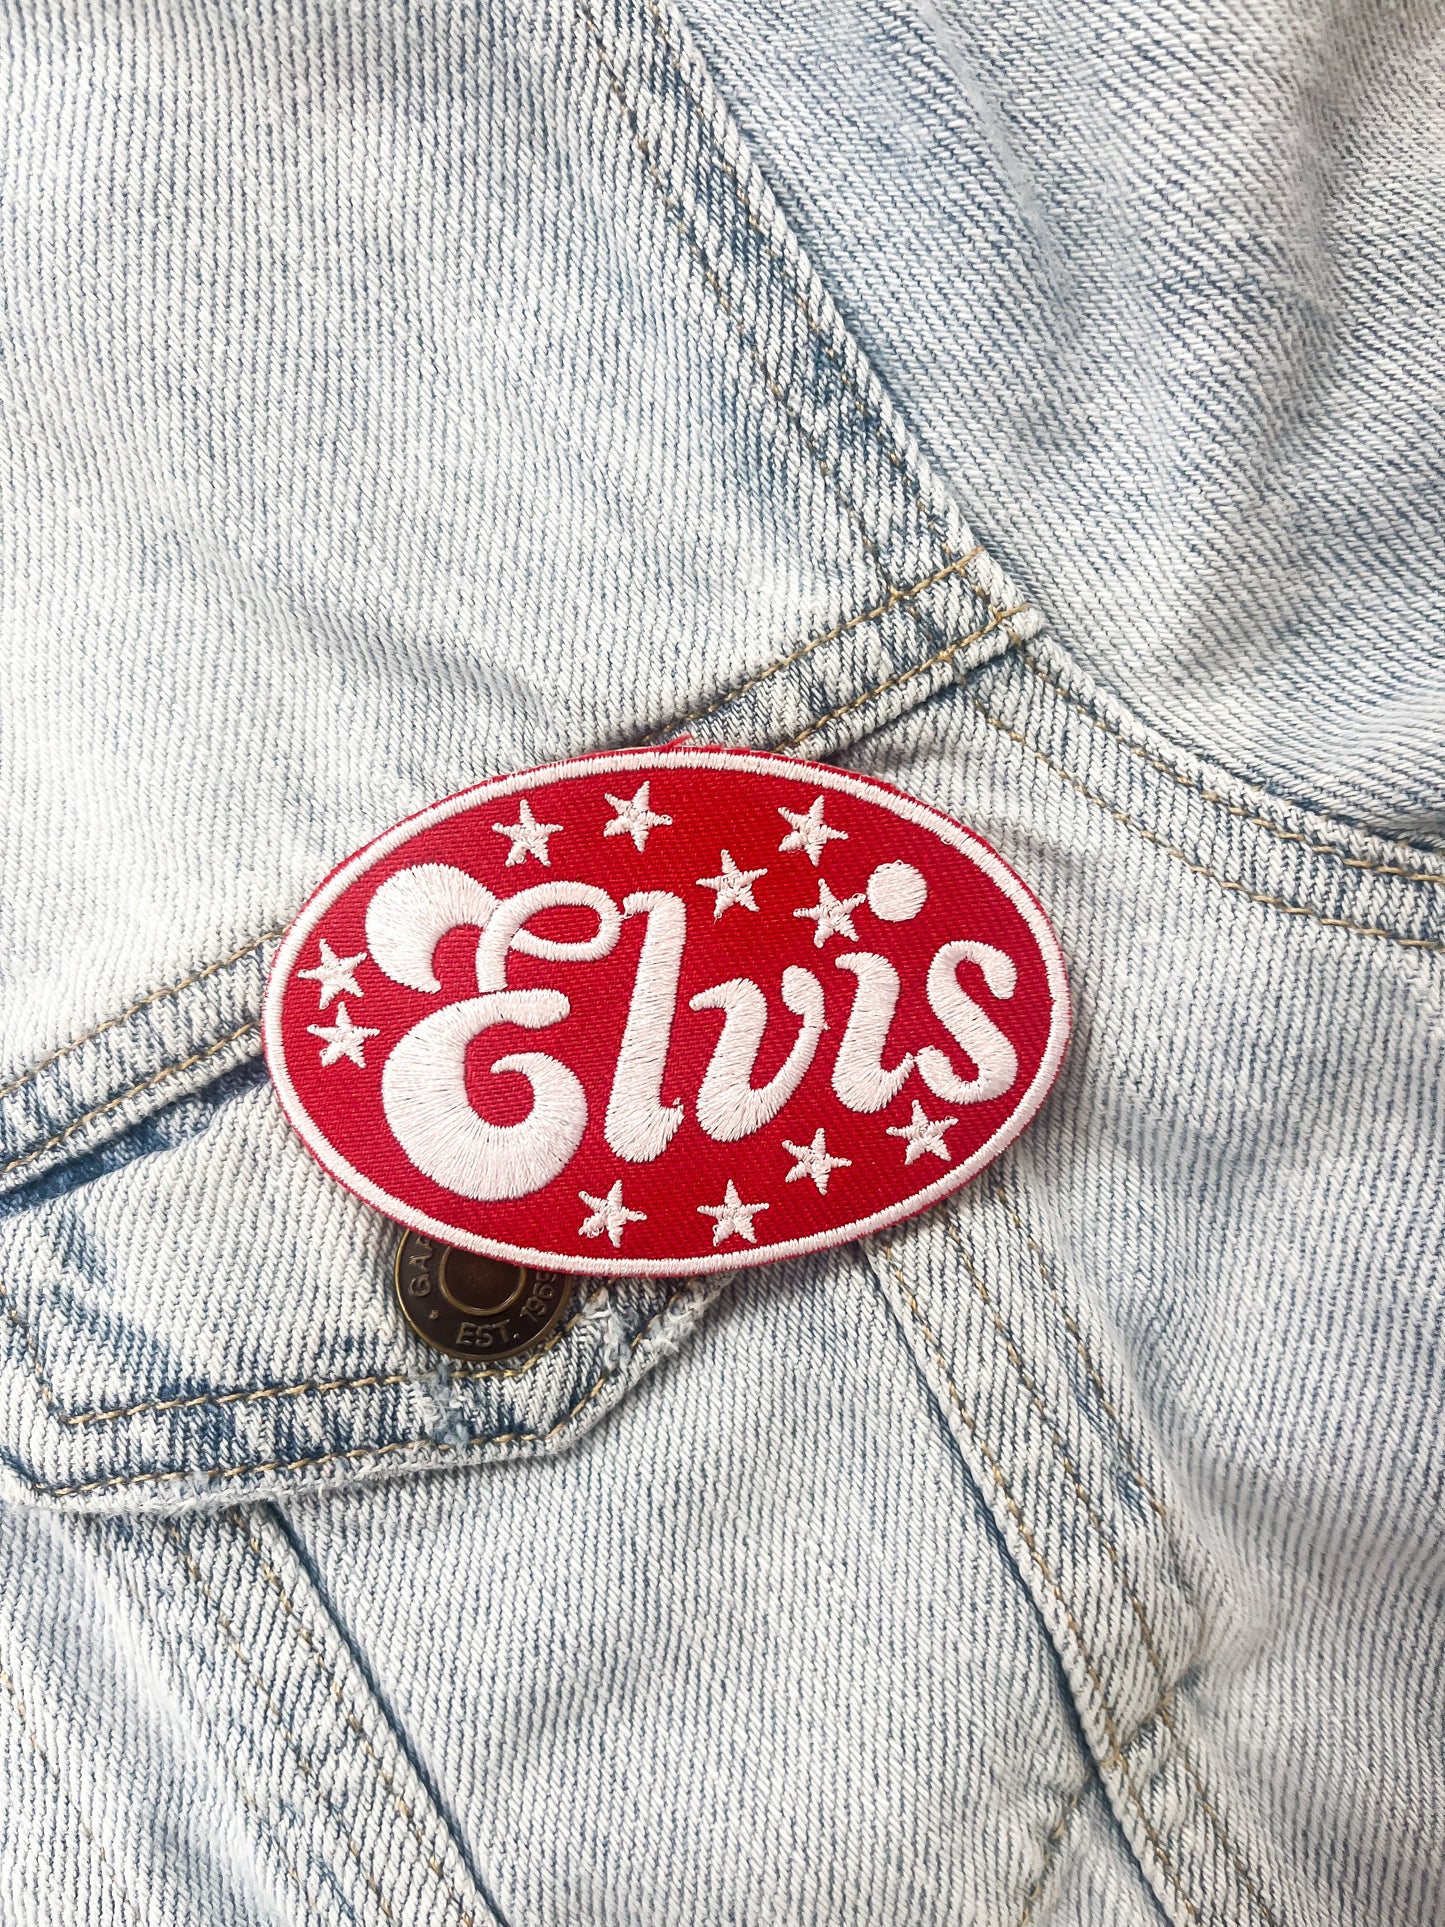 Elvis patch